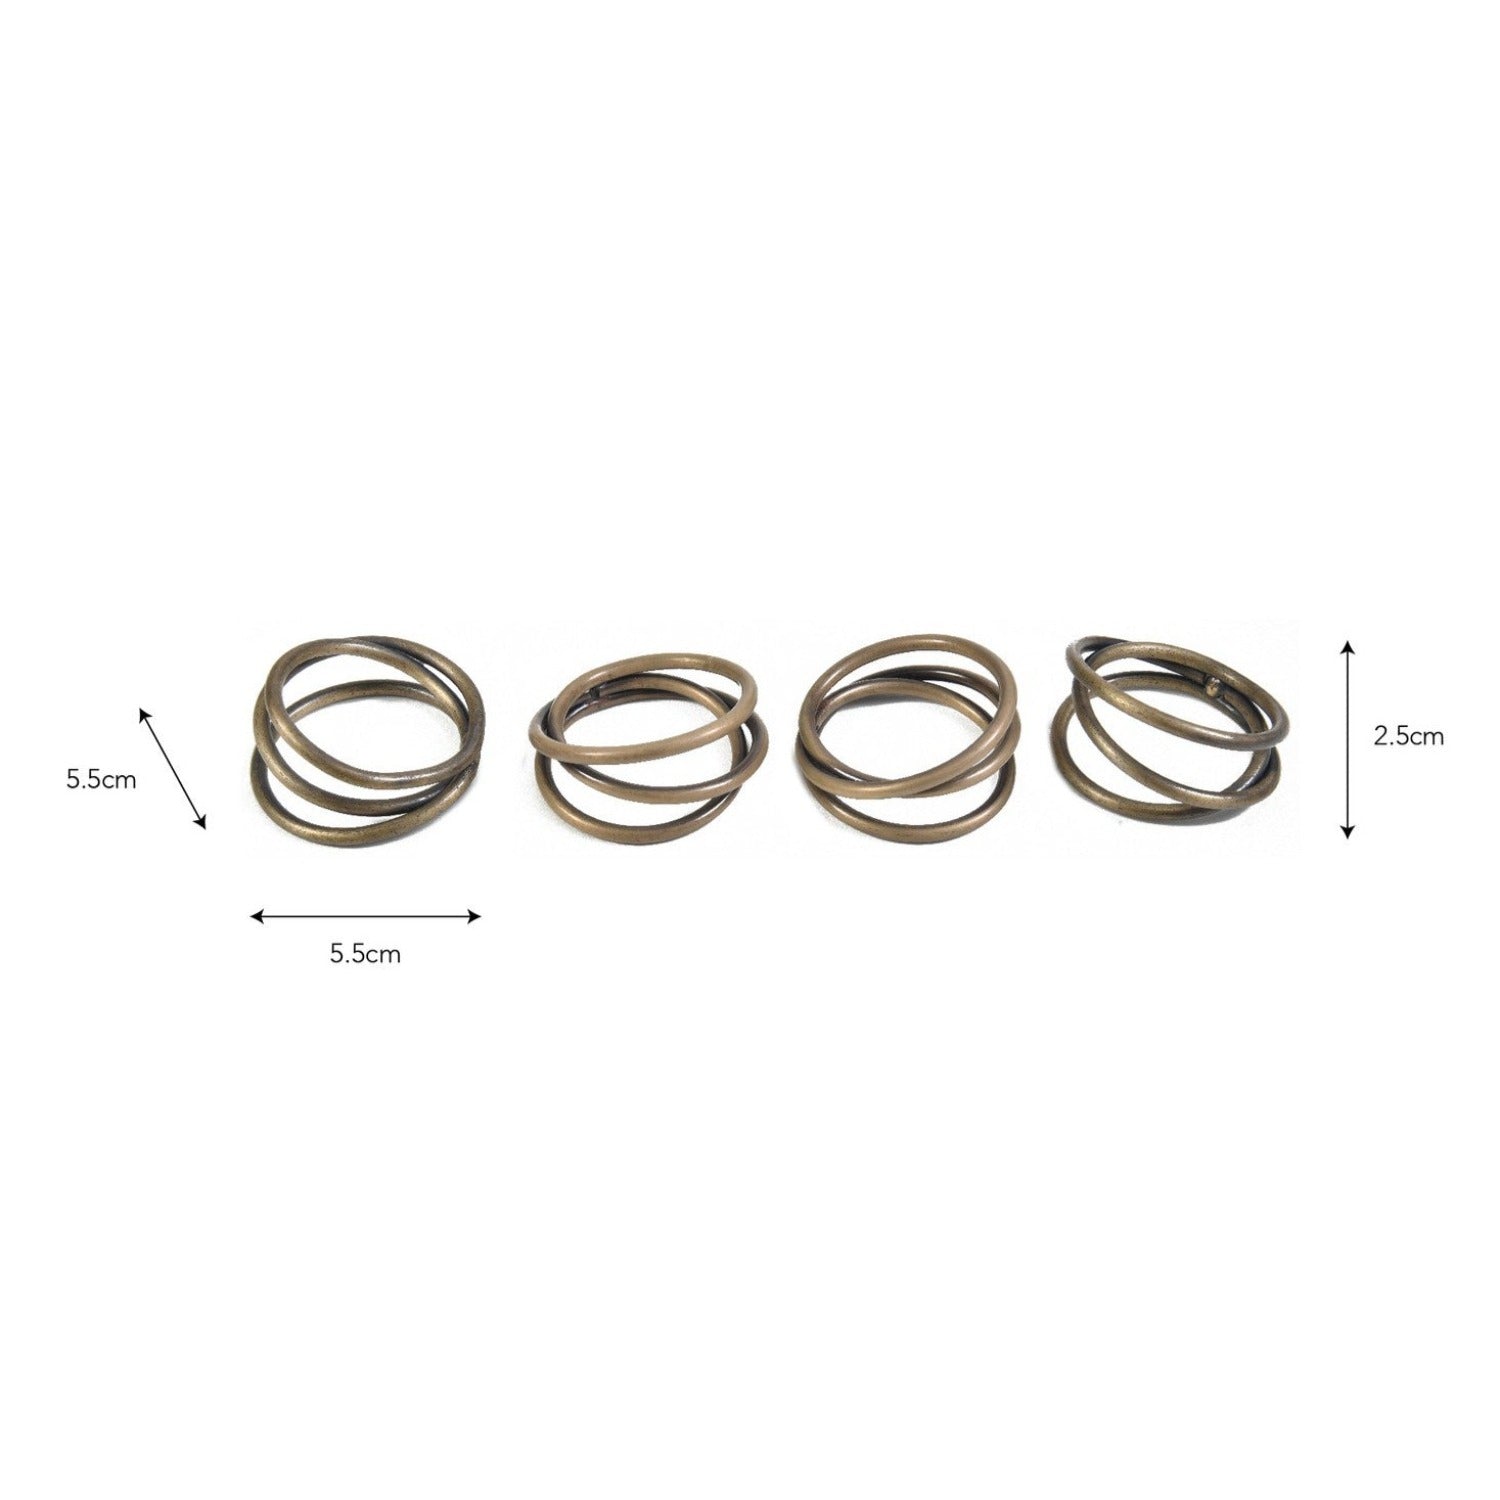 Set of 4 Brompton Napkin Rings